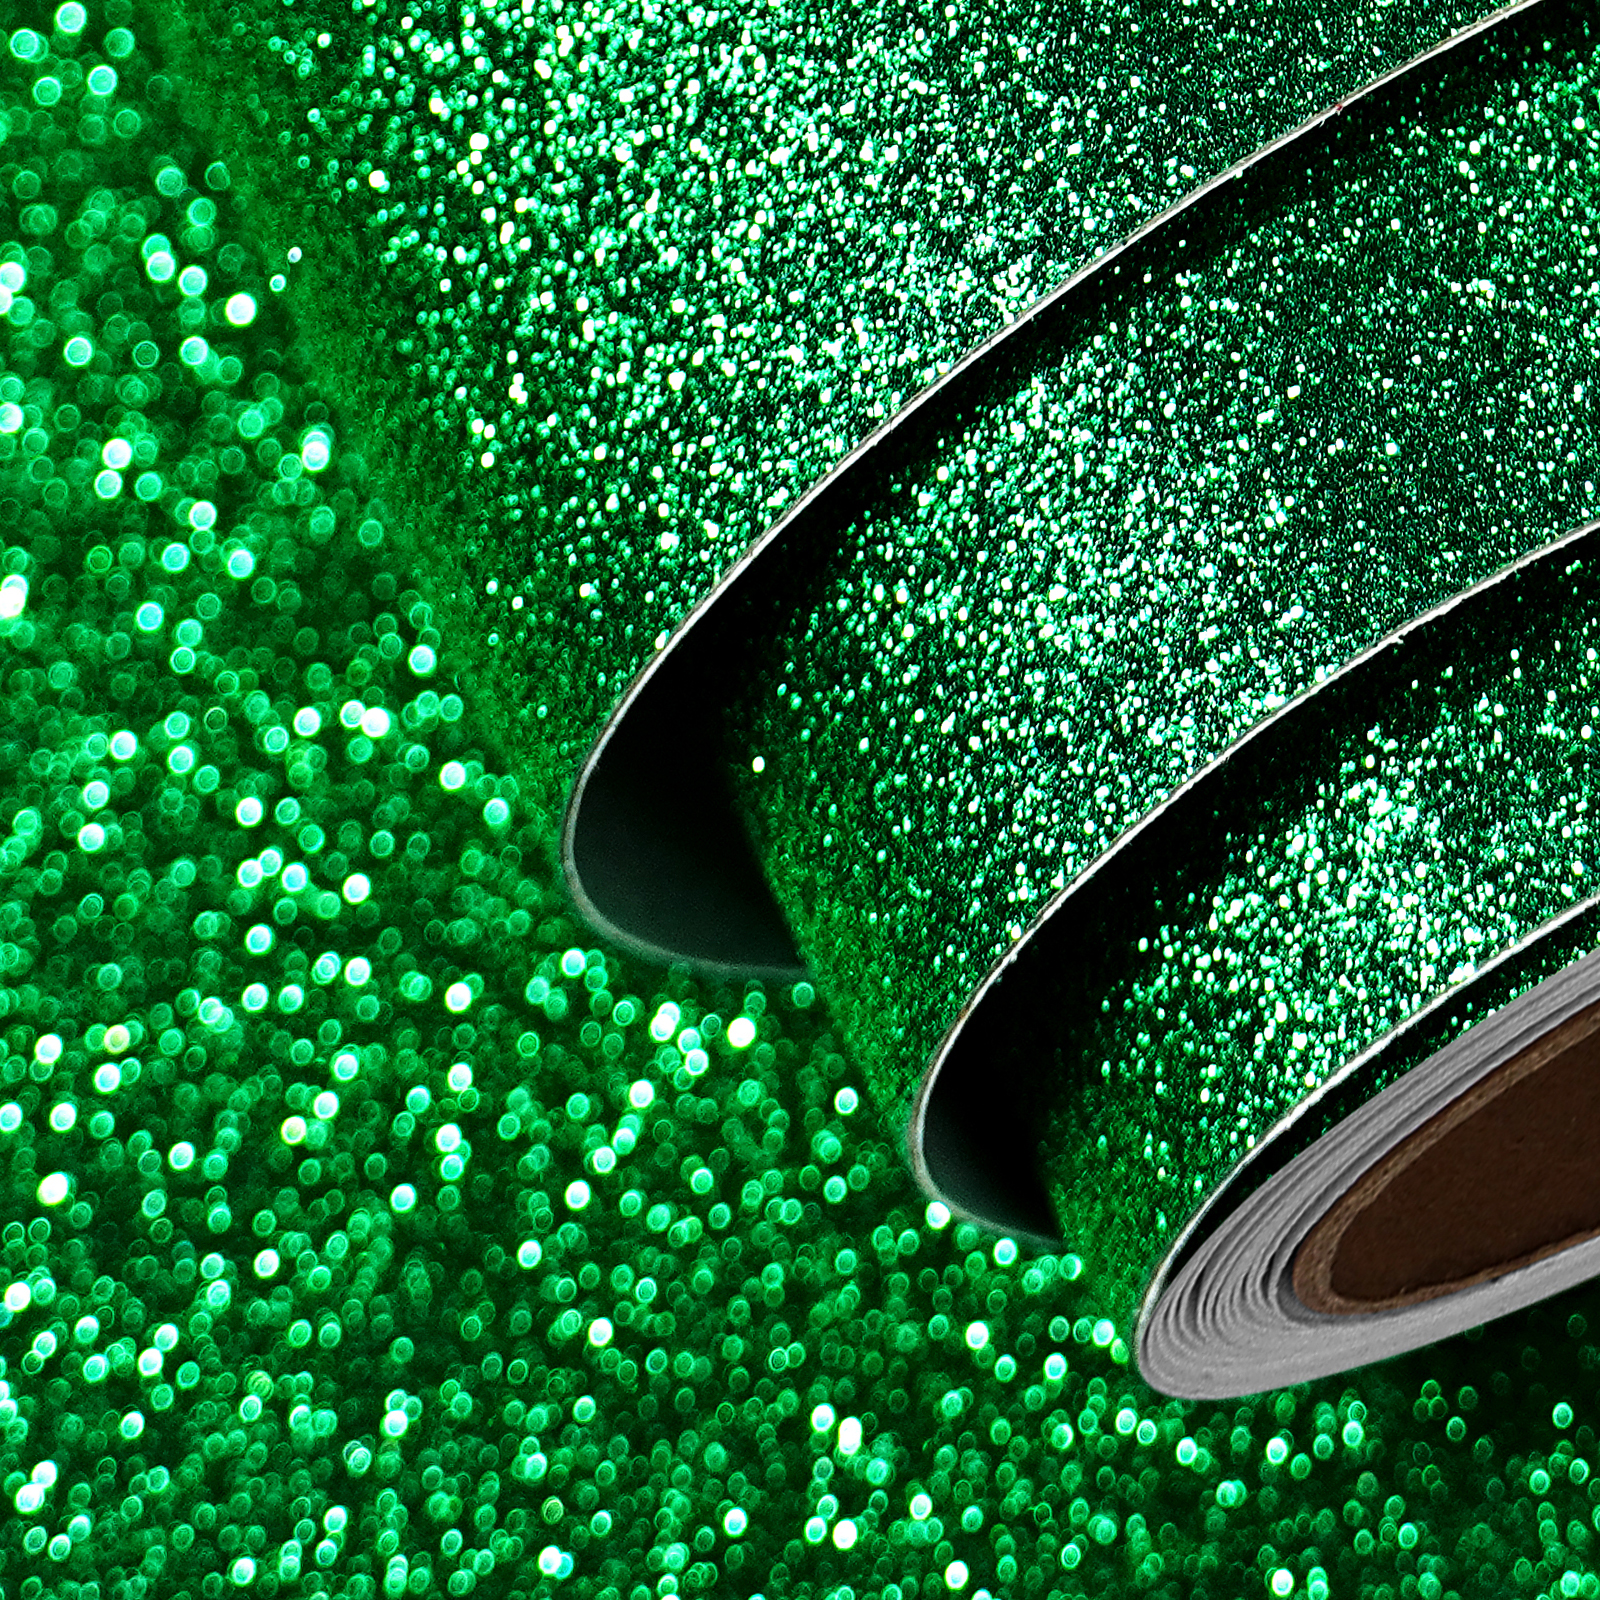 FunStick Irish Green Glitter Wallpaper Glitter Contact Paper Waterproof Sparkle Peel and Stick Wallpaper Removable Decorative for Walls Cabinets